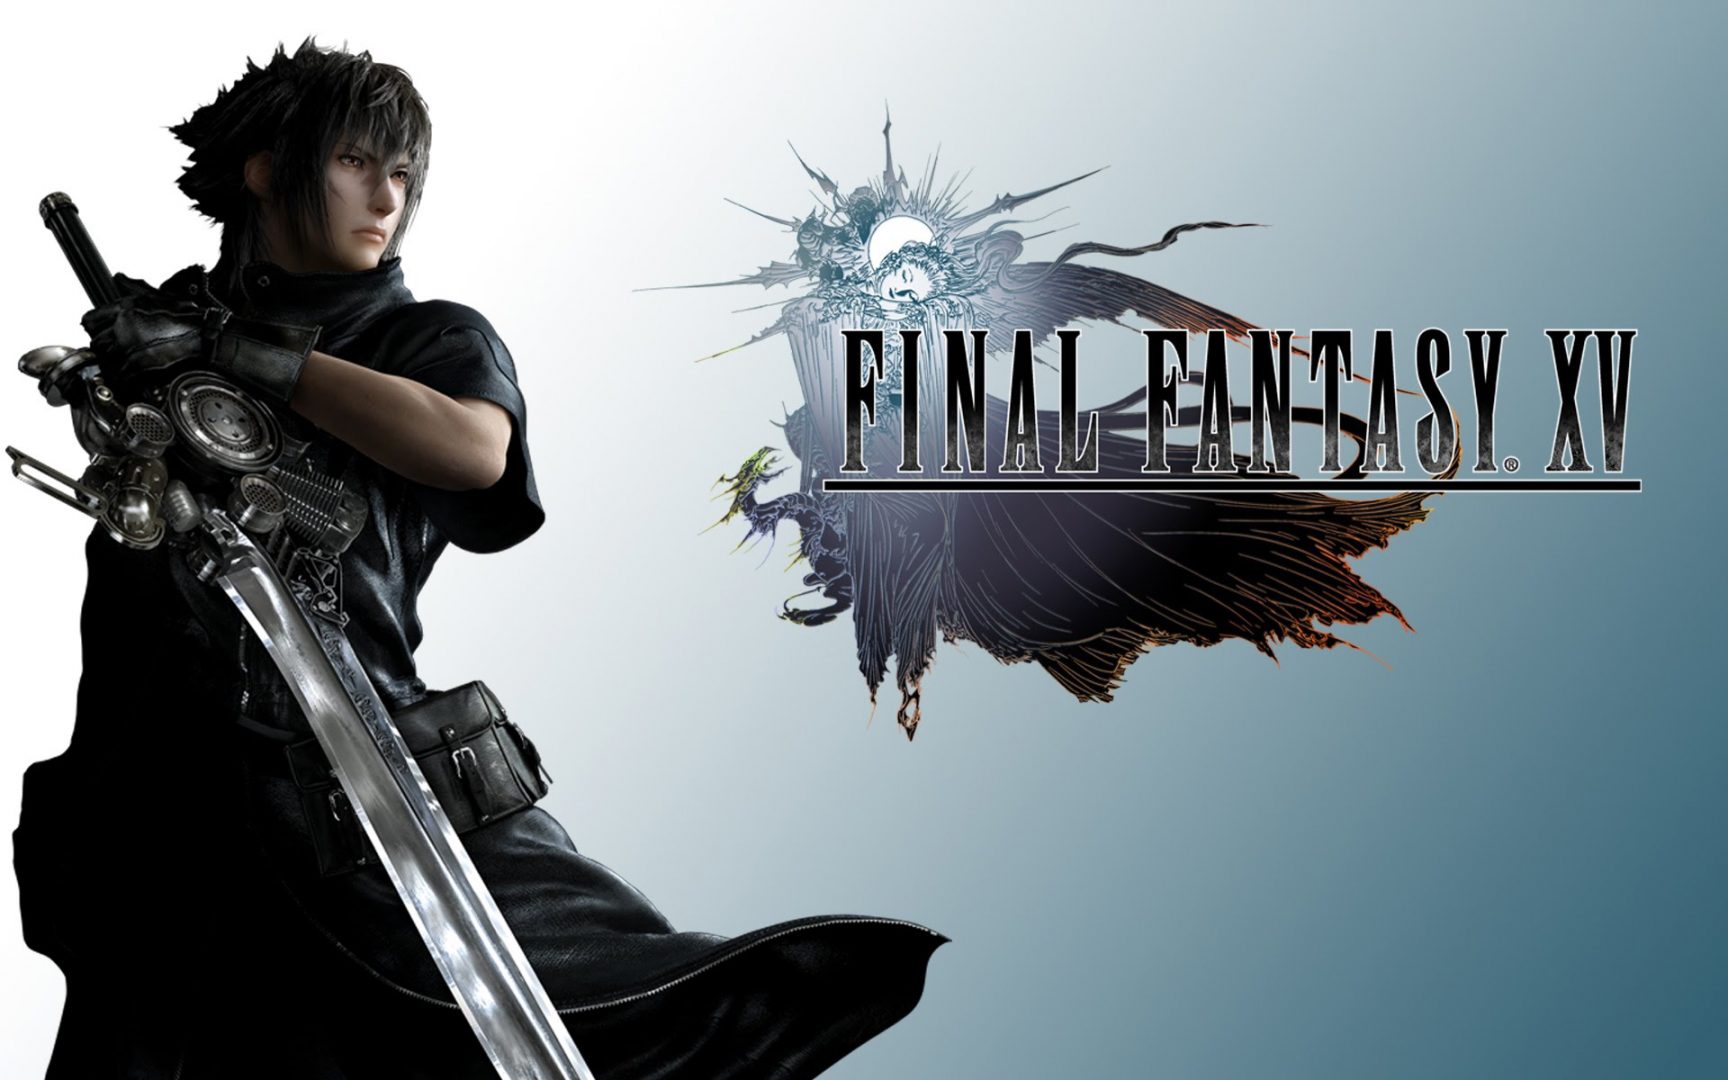 Brotherhood: Final Fantasy XV  Final fantasy xv, Final fantasy